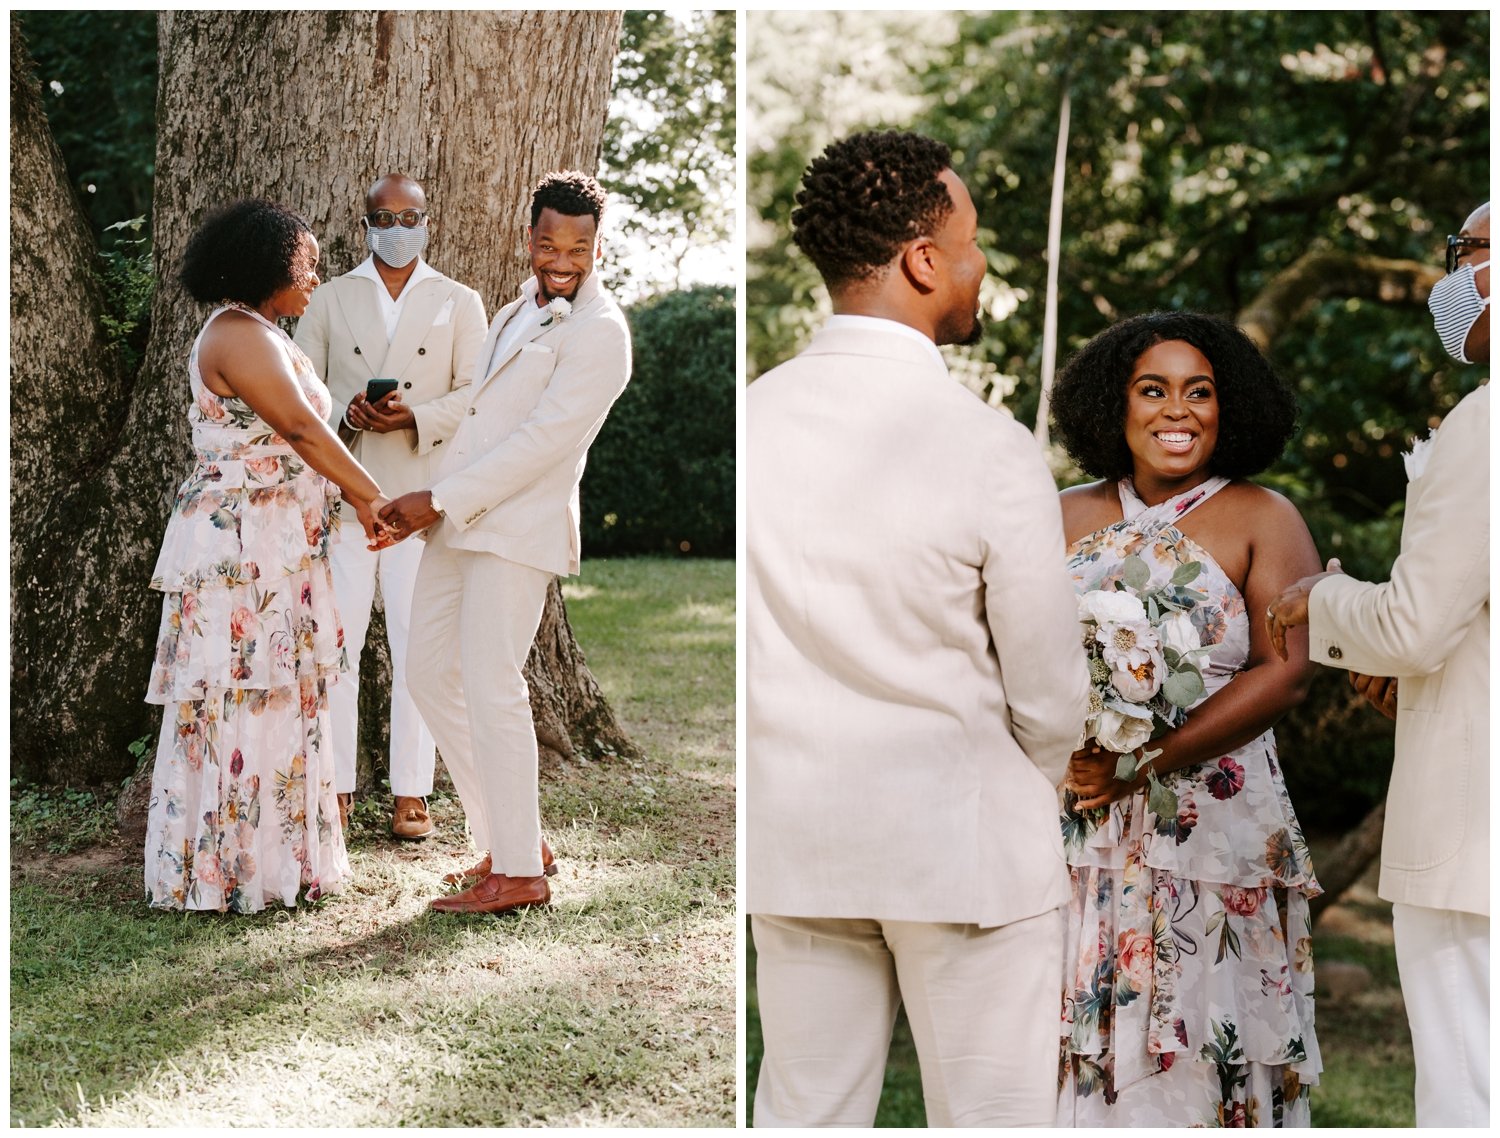 A wedding ceremony under the pecan tree